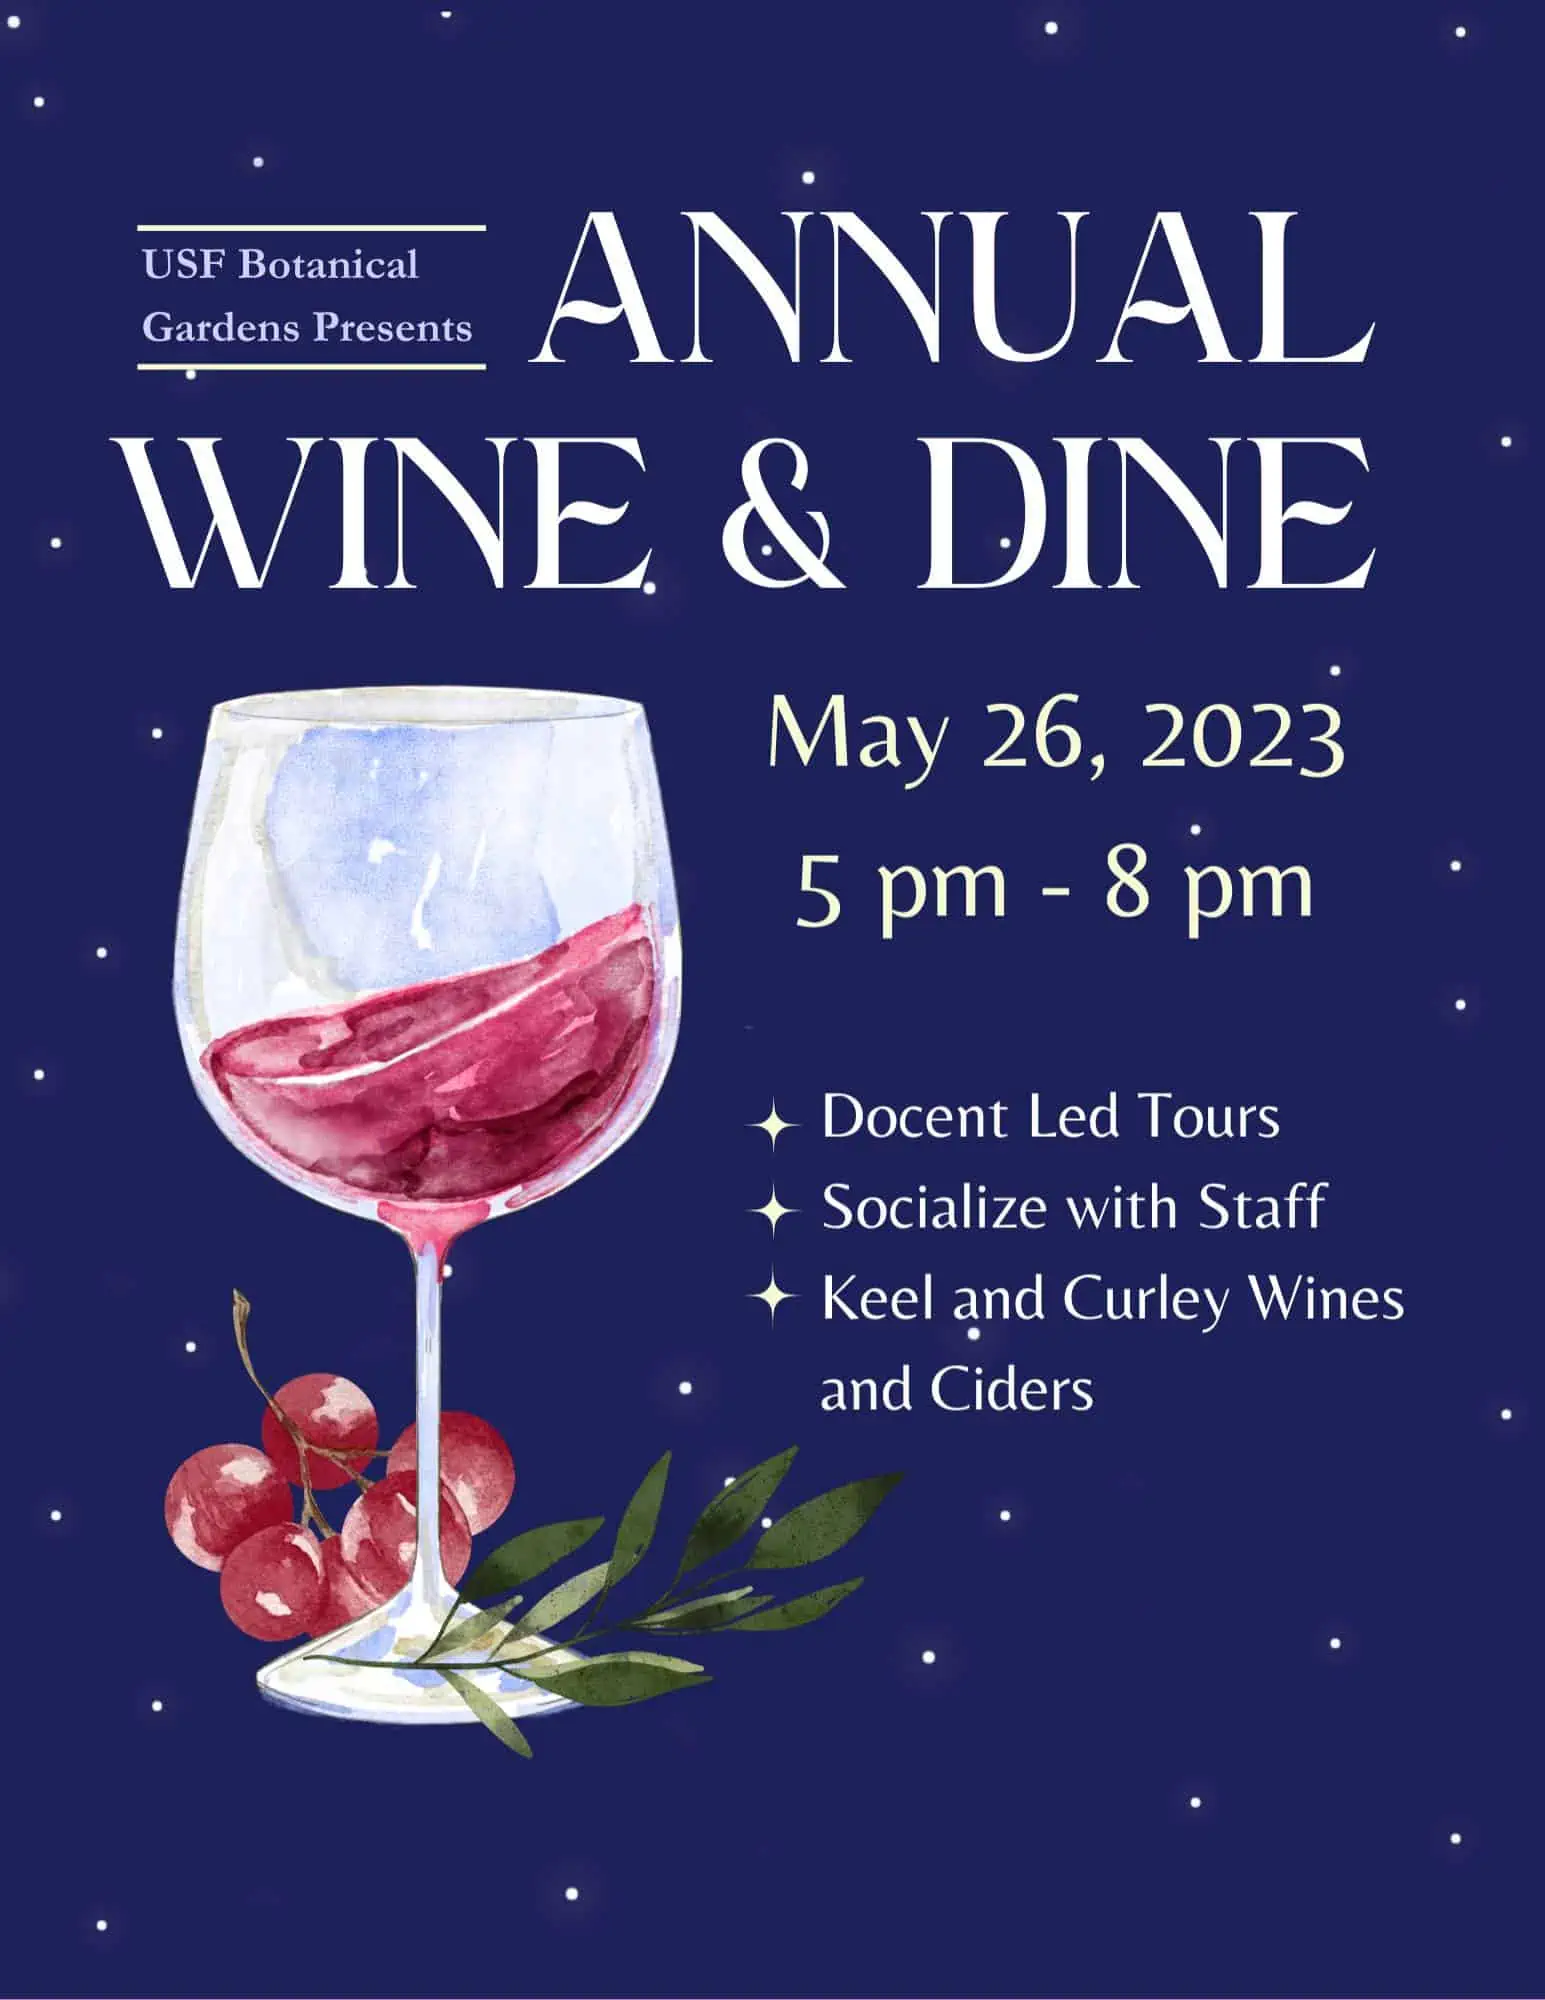 Annual Wine & Dine at USF Botanical Gardens